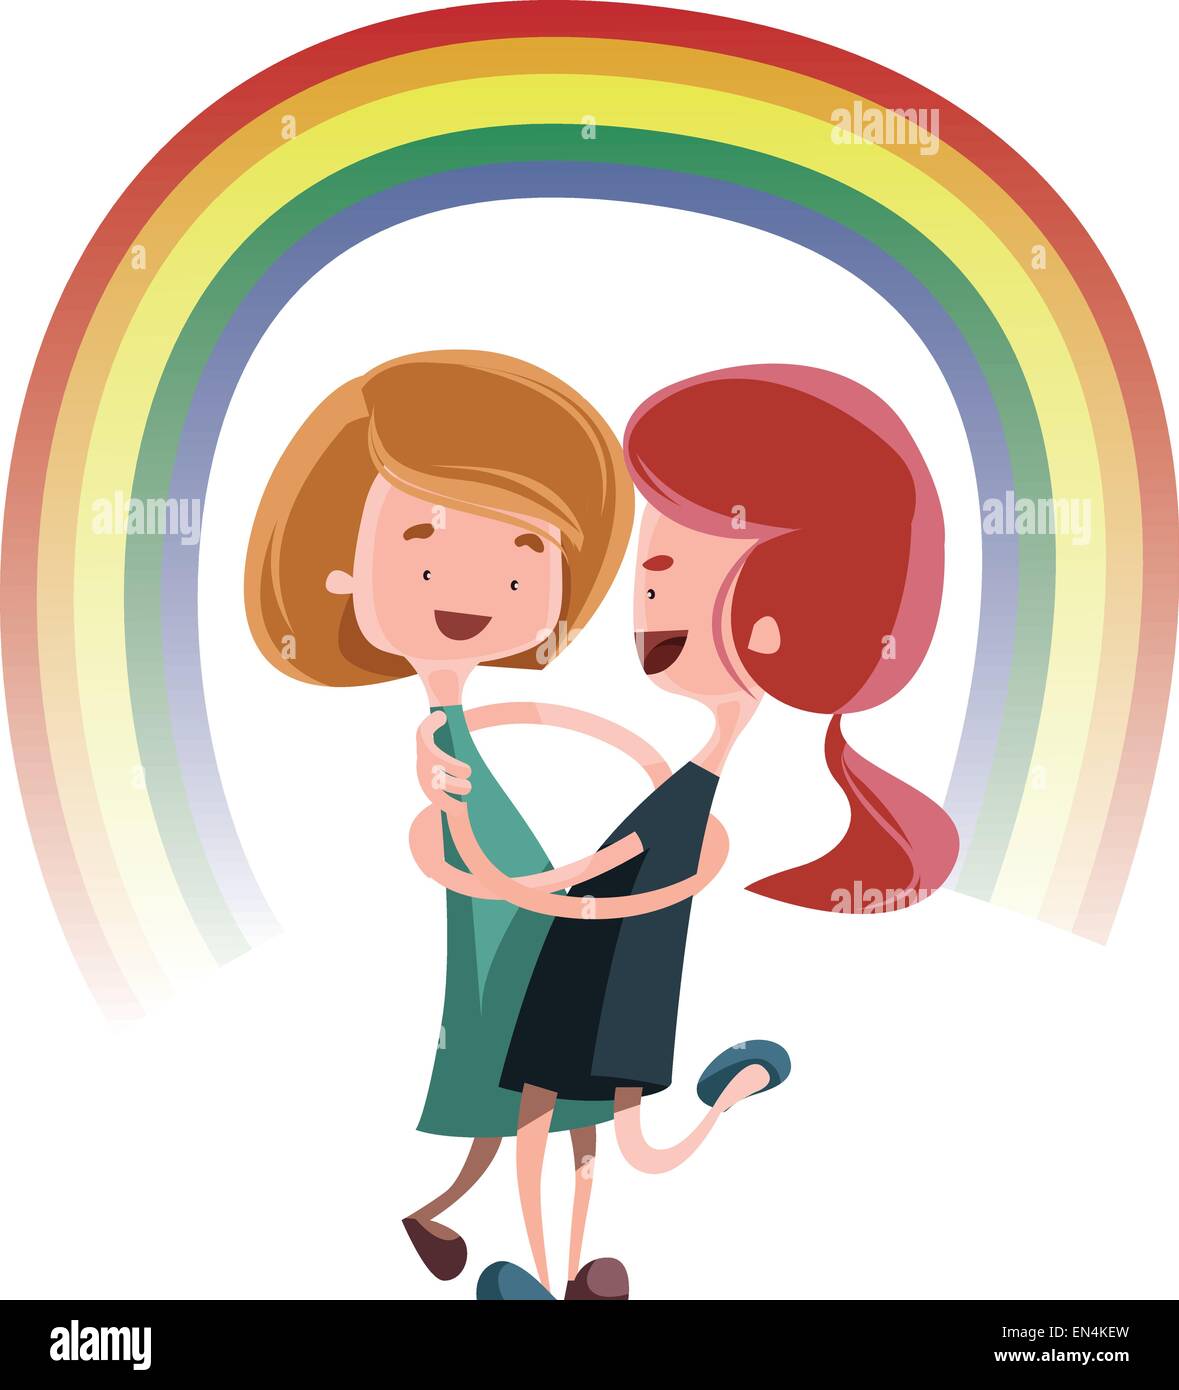 Friendship hug under rainbow vector illustration cartoon character Stock Vector